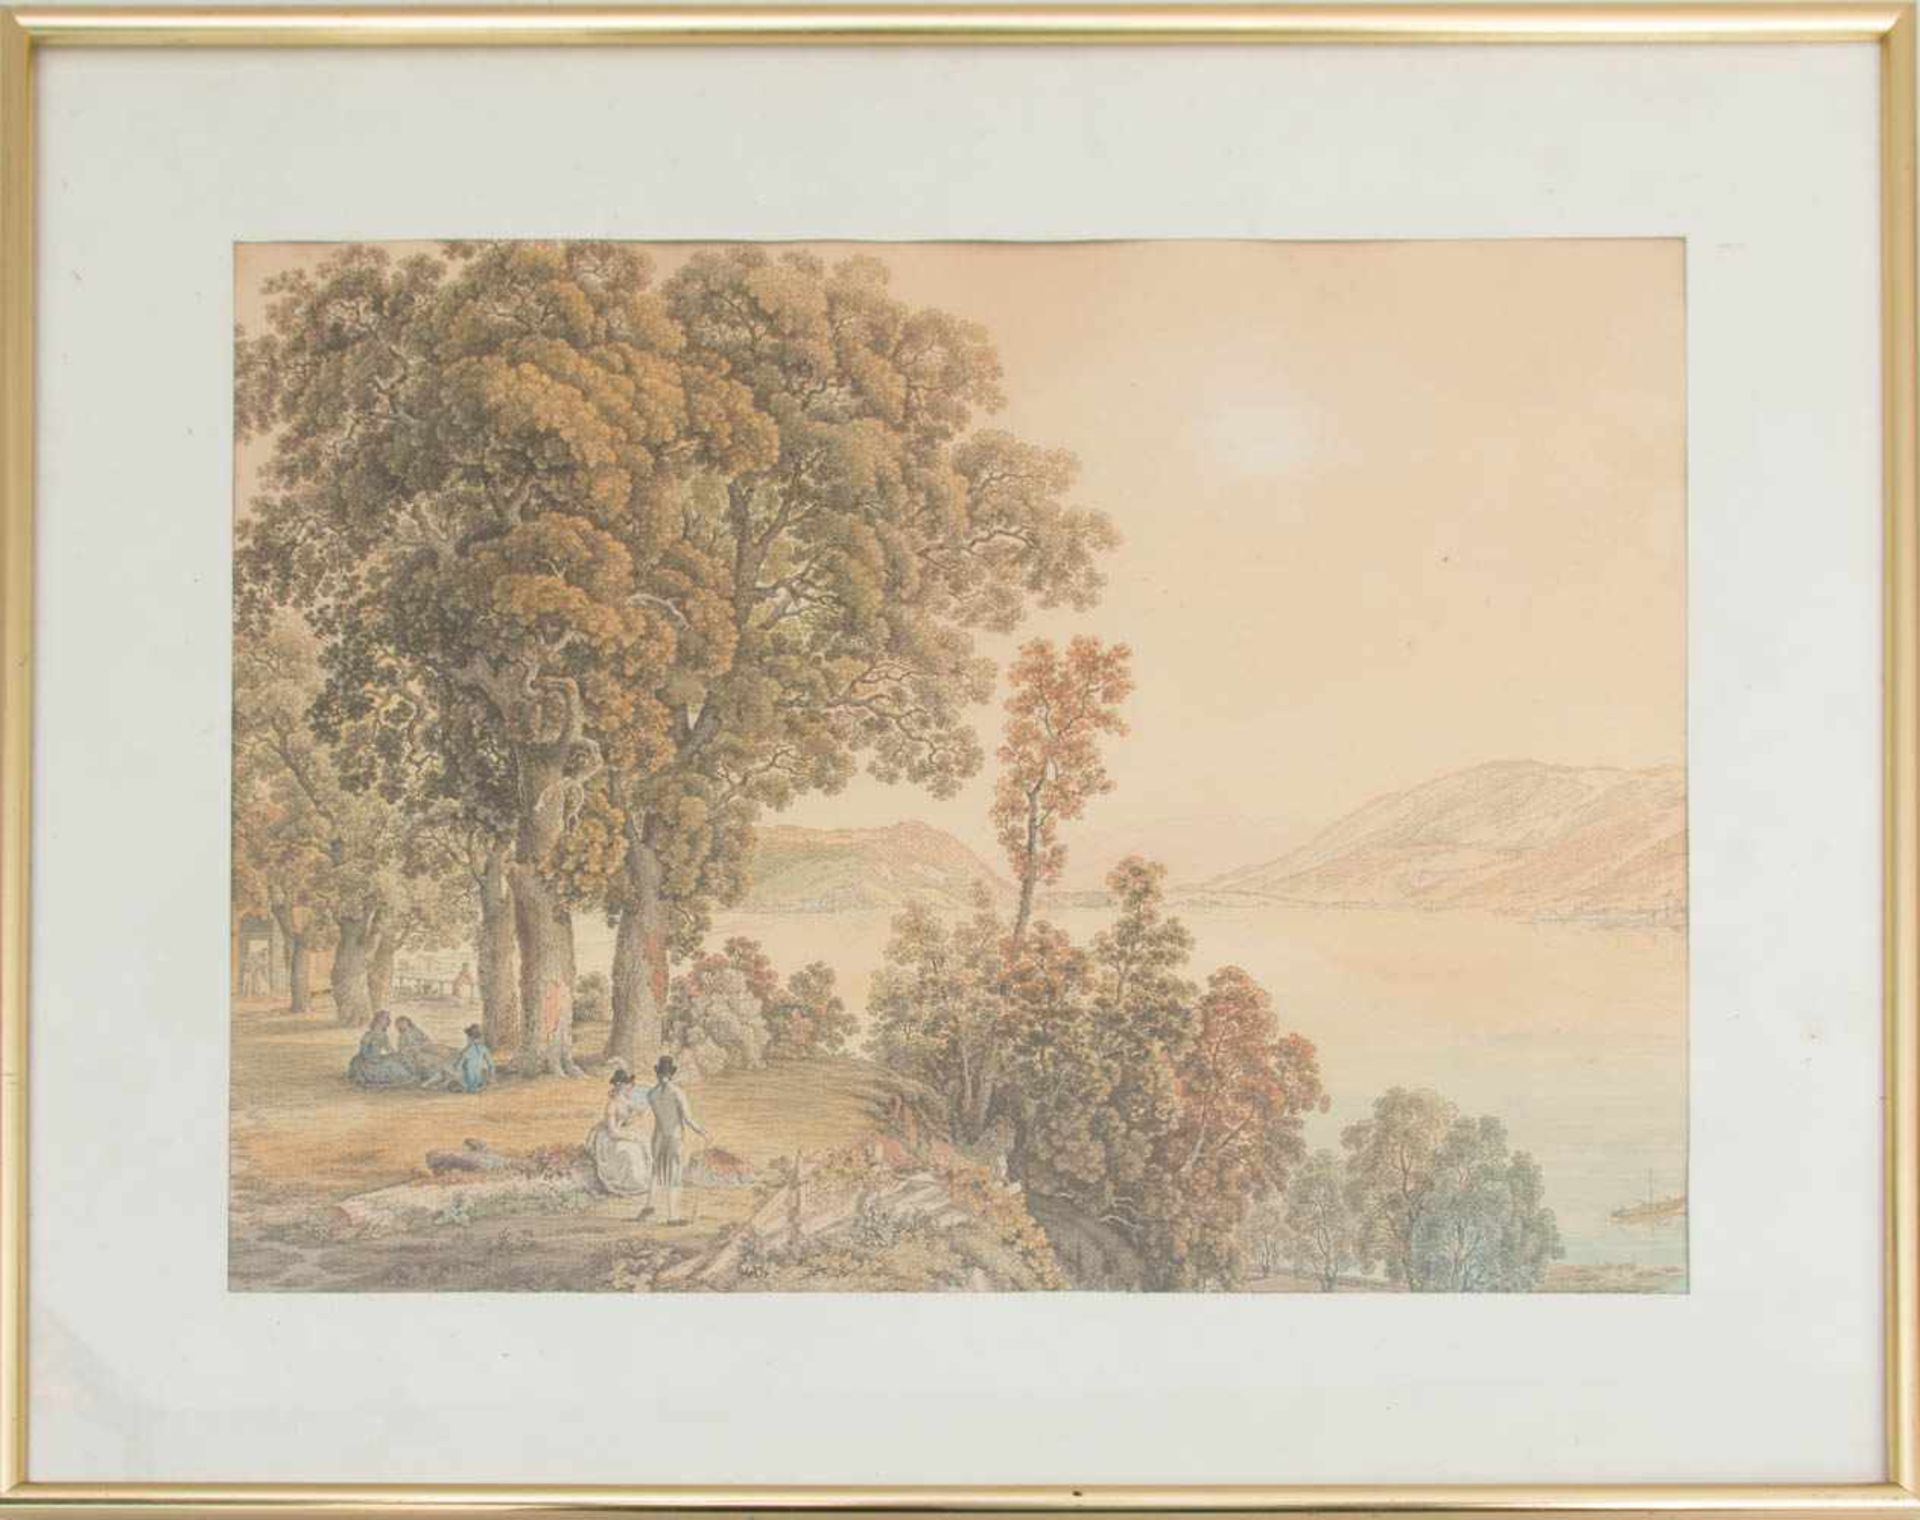 GABRIEL LORY, AM BEWALDETEN UFER, Aquarellzeichnung/Papier, hinter Glas.Gabriel Lory (1763-1840).